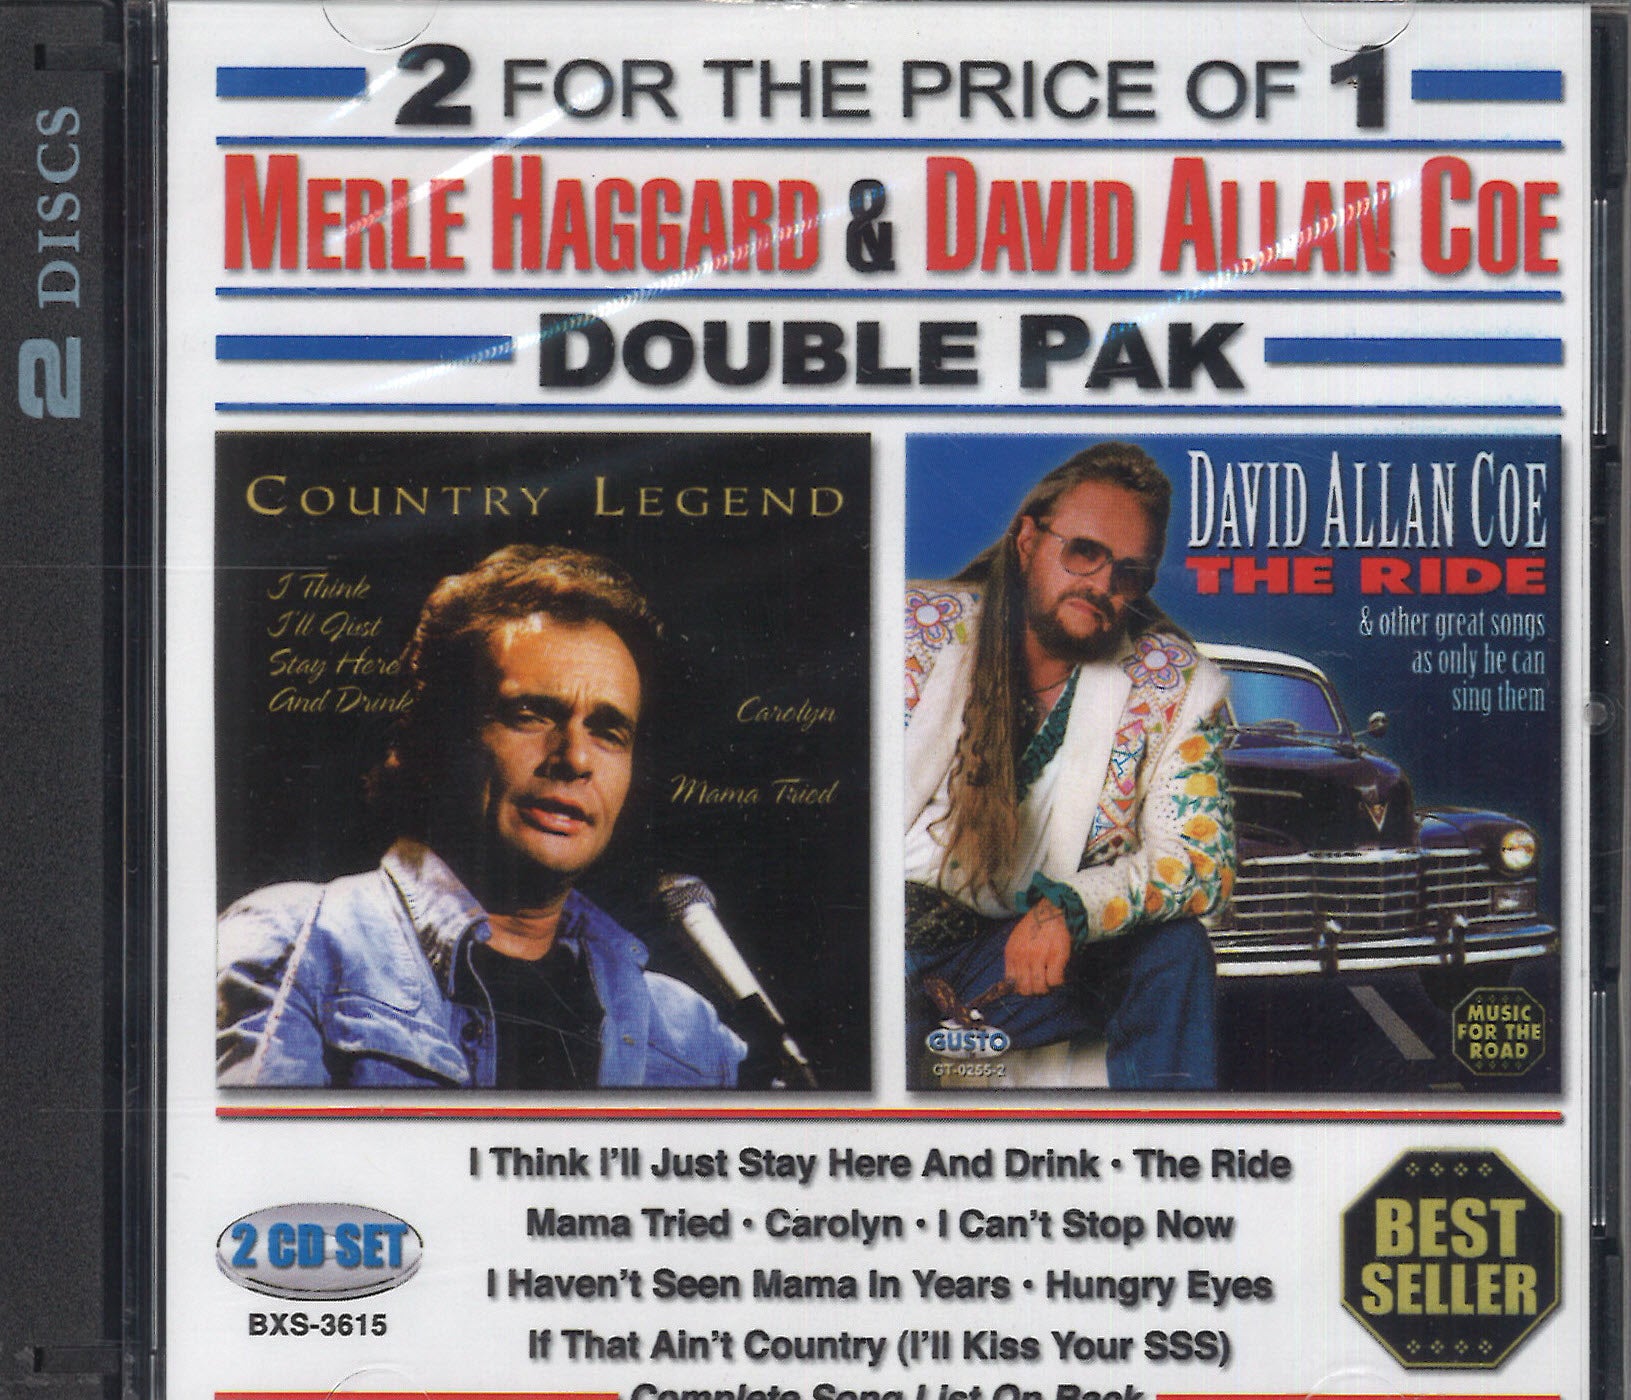 Merle Haggard & David Allan Coe Double Pak: 2 CD Set